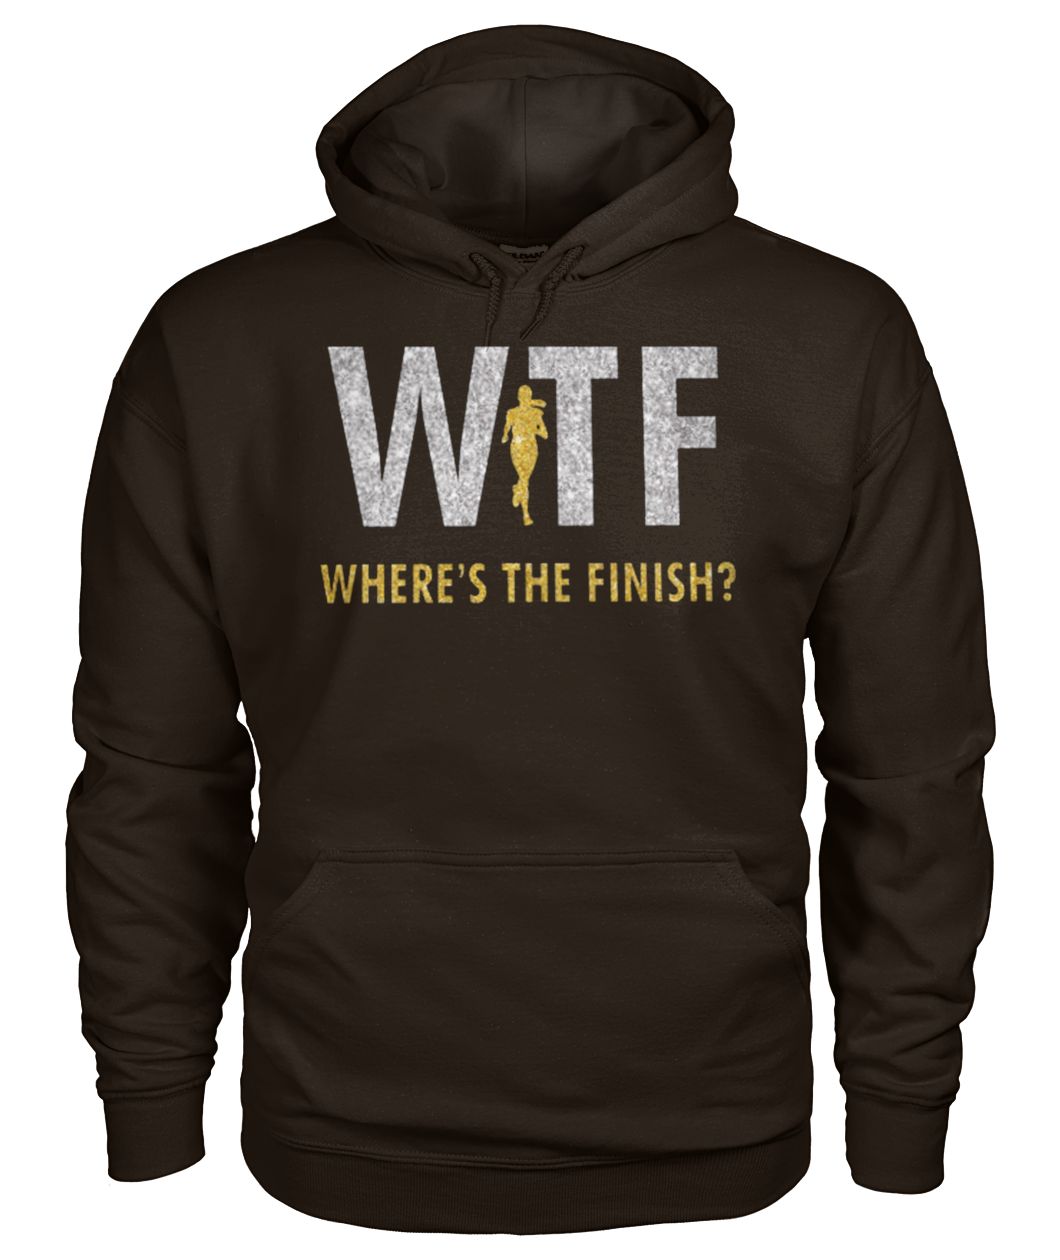 WTF where's the finish gildan hoodie